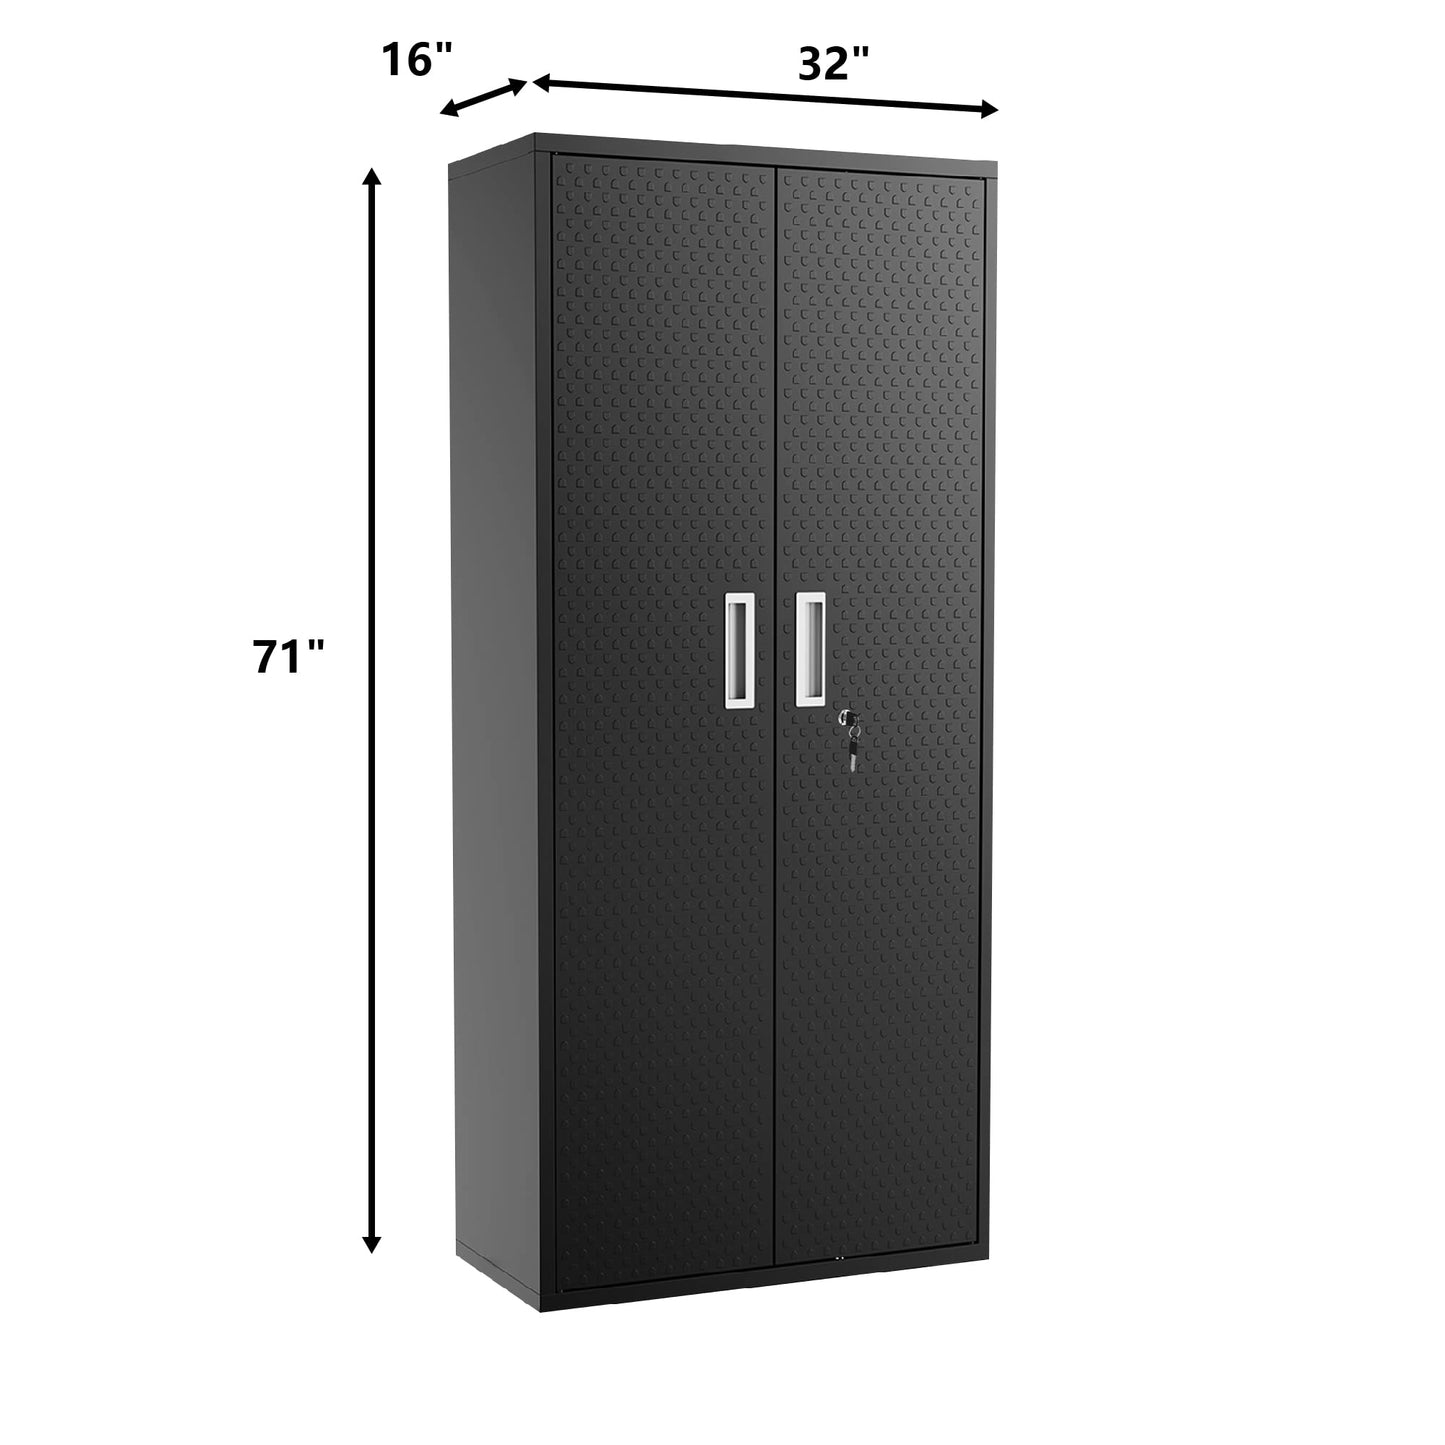 TOPKEY Metal Storage Cabinets Locker for Home Office, 71" Garage Storage Cabinet with Lockable Door, Adjustable Shelves and Hanging Rod, Steel